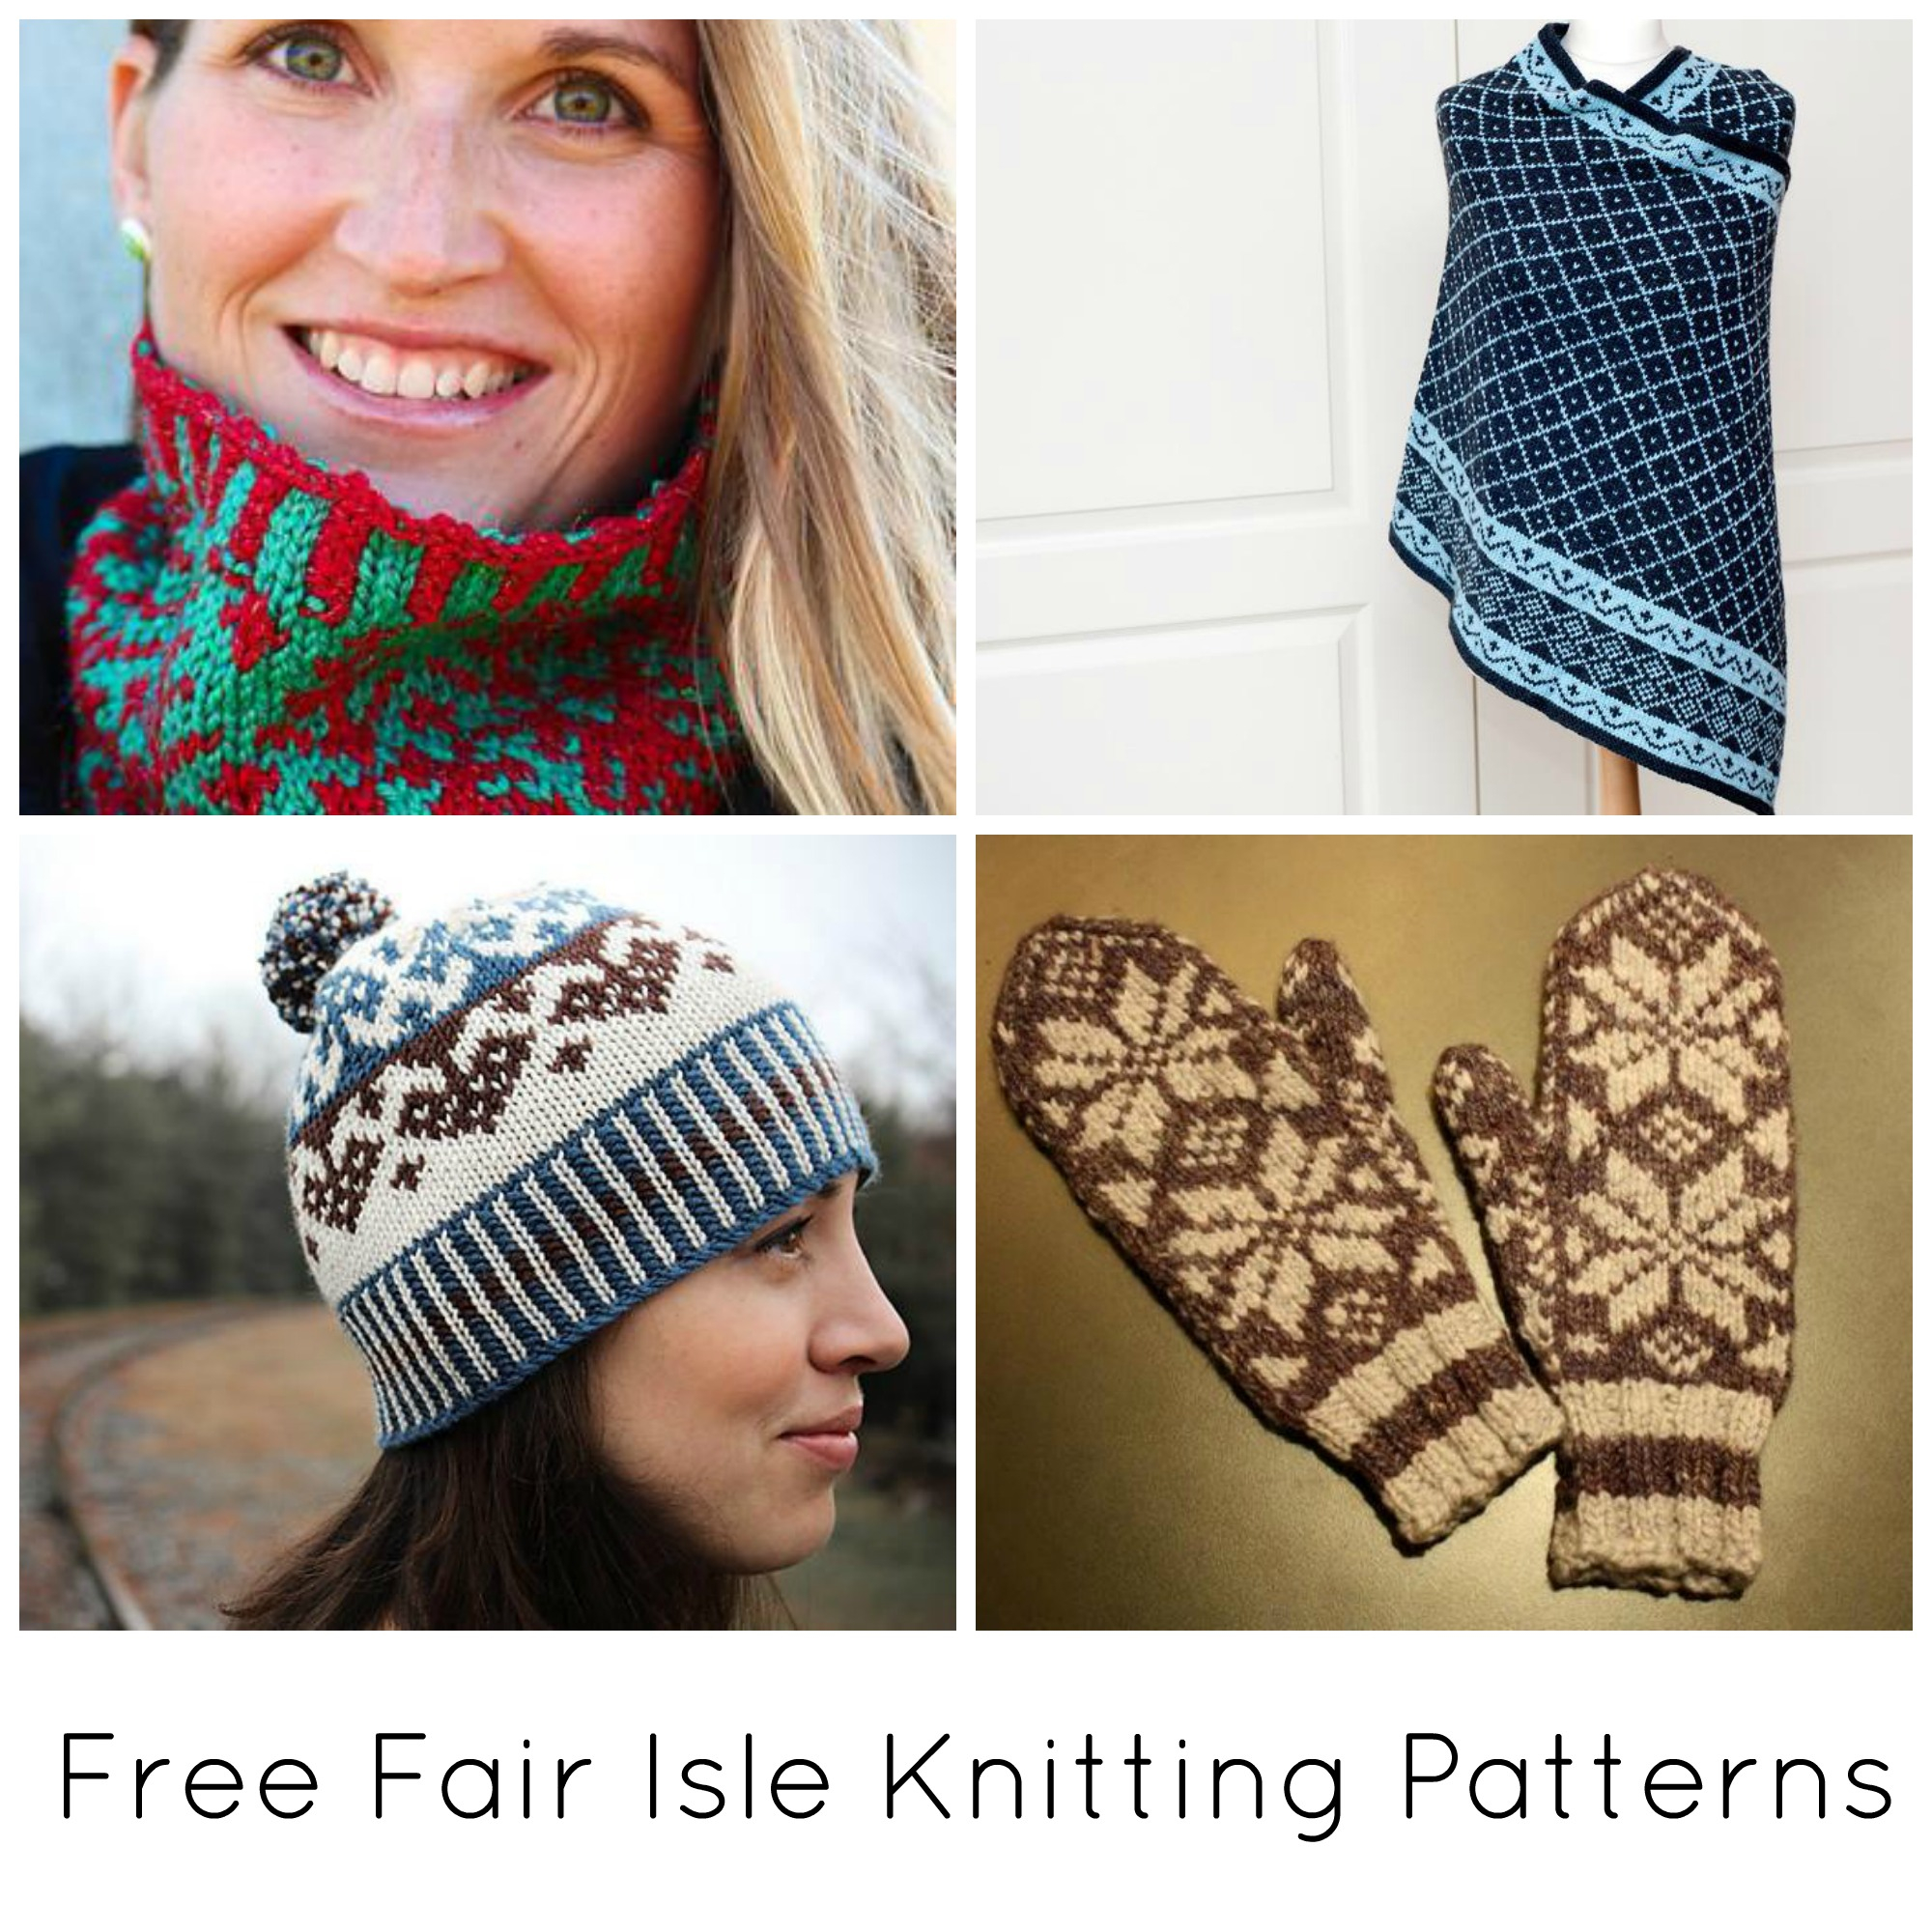 Colorwork Knitting Patterns Fair Isles 10 Free Fair Isle Knitting Patterns On Craftsy